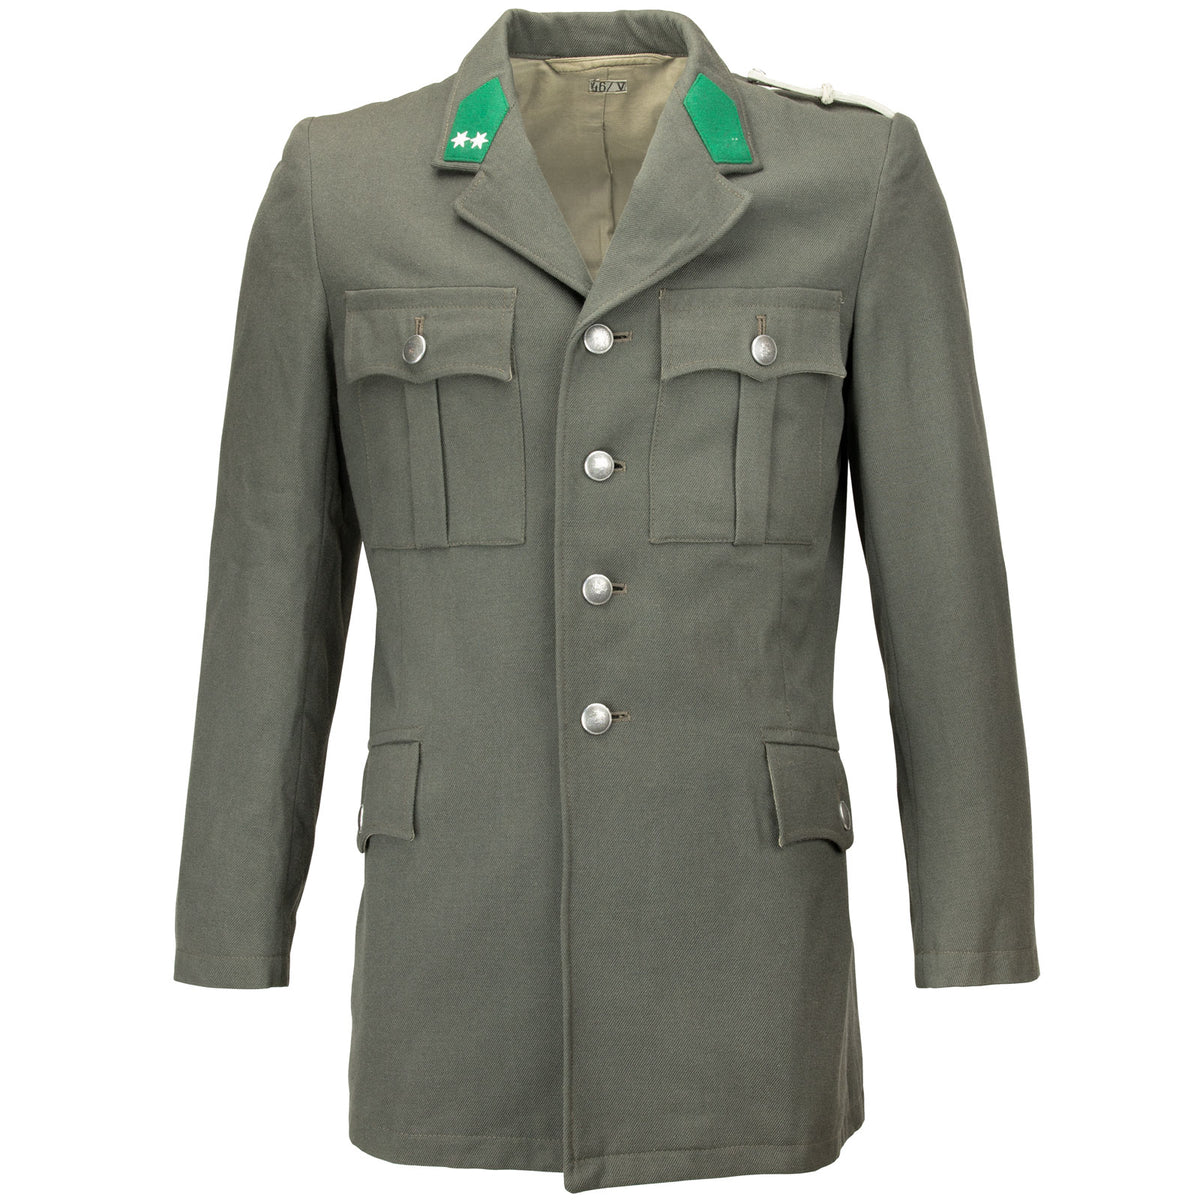 Austrian Army 1970s Uniform Dress Jacket